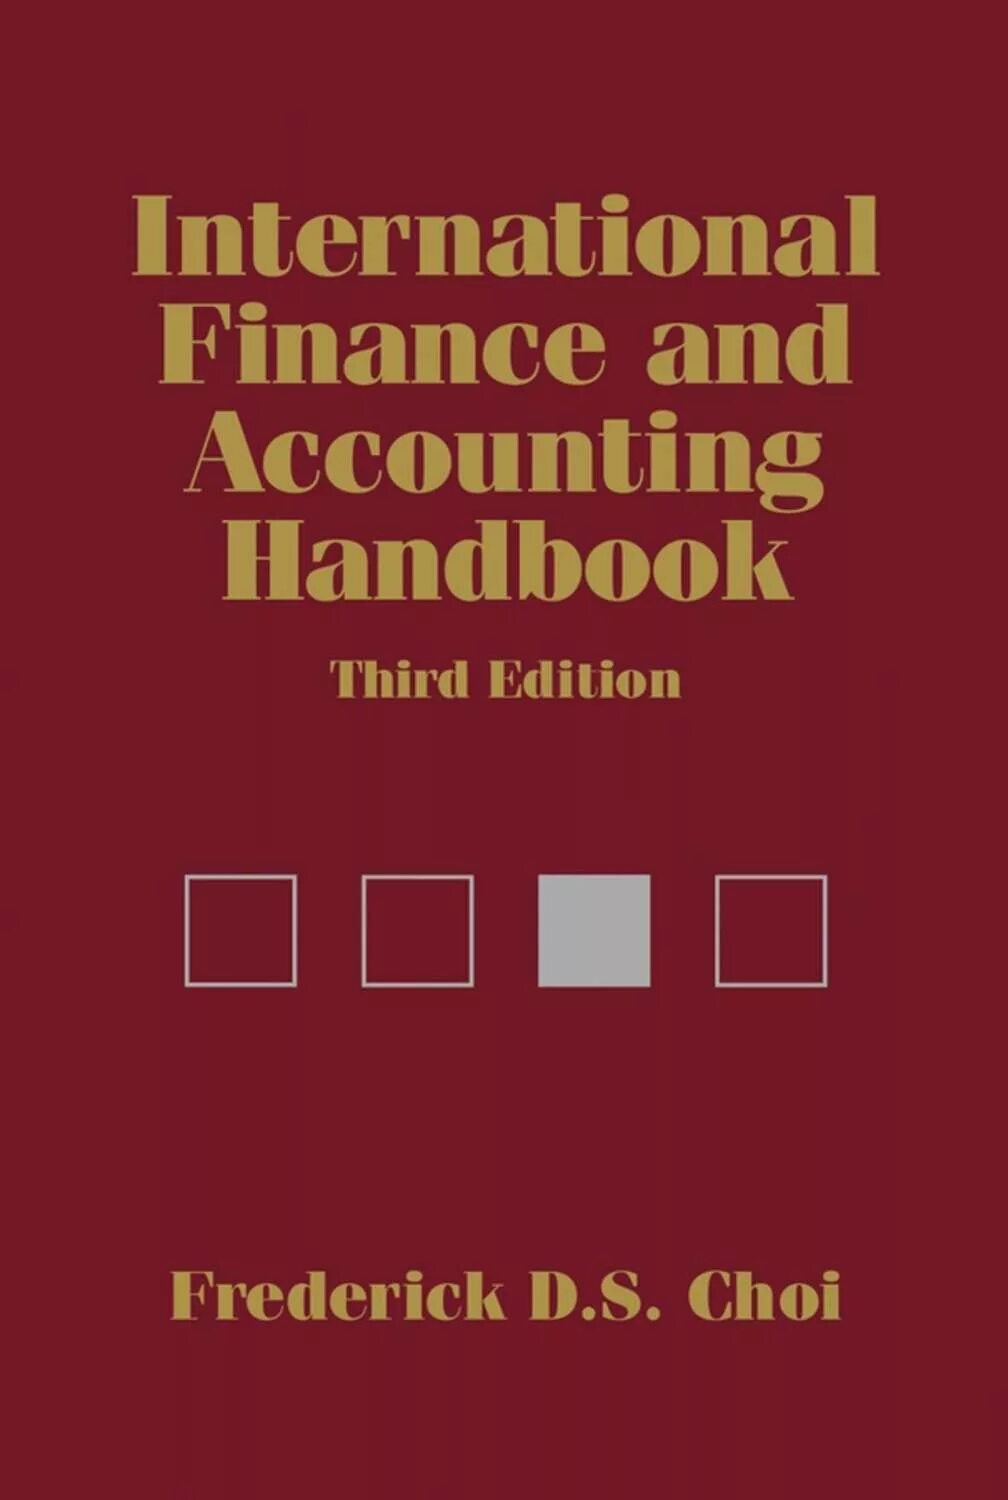 Accounting book. International Finance book. Financial Accounting books. Accountants' Handbook. Account book.